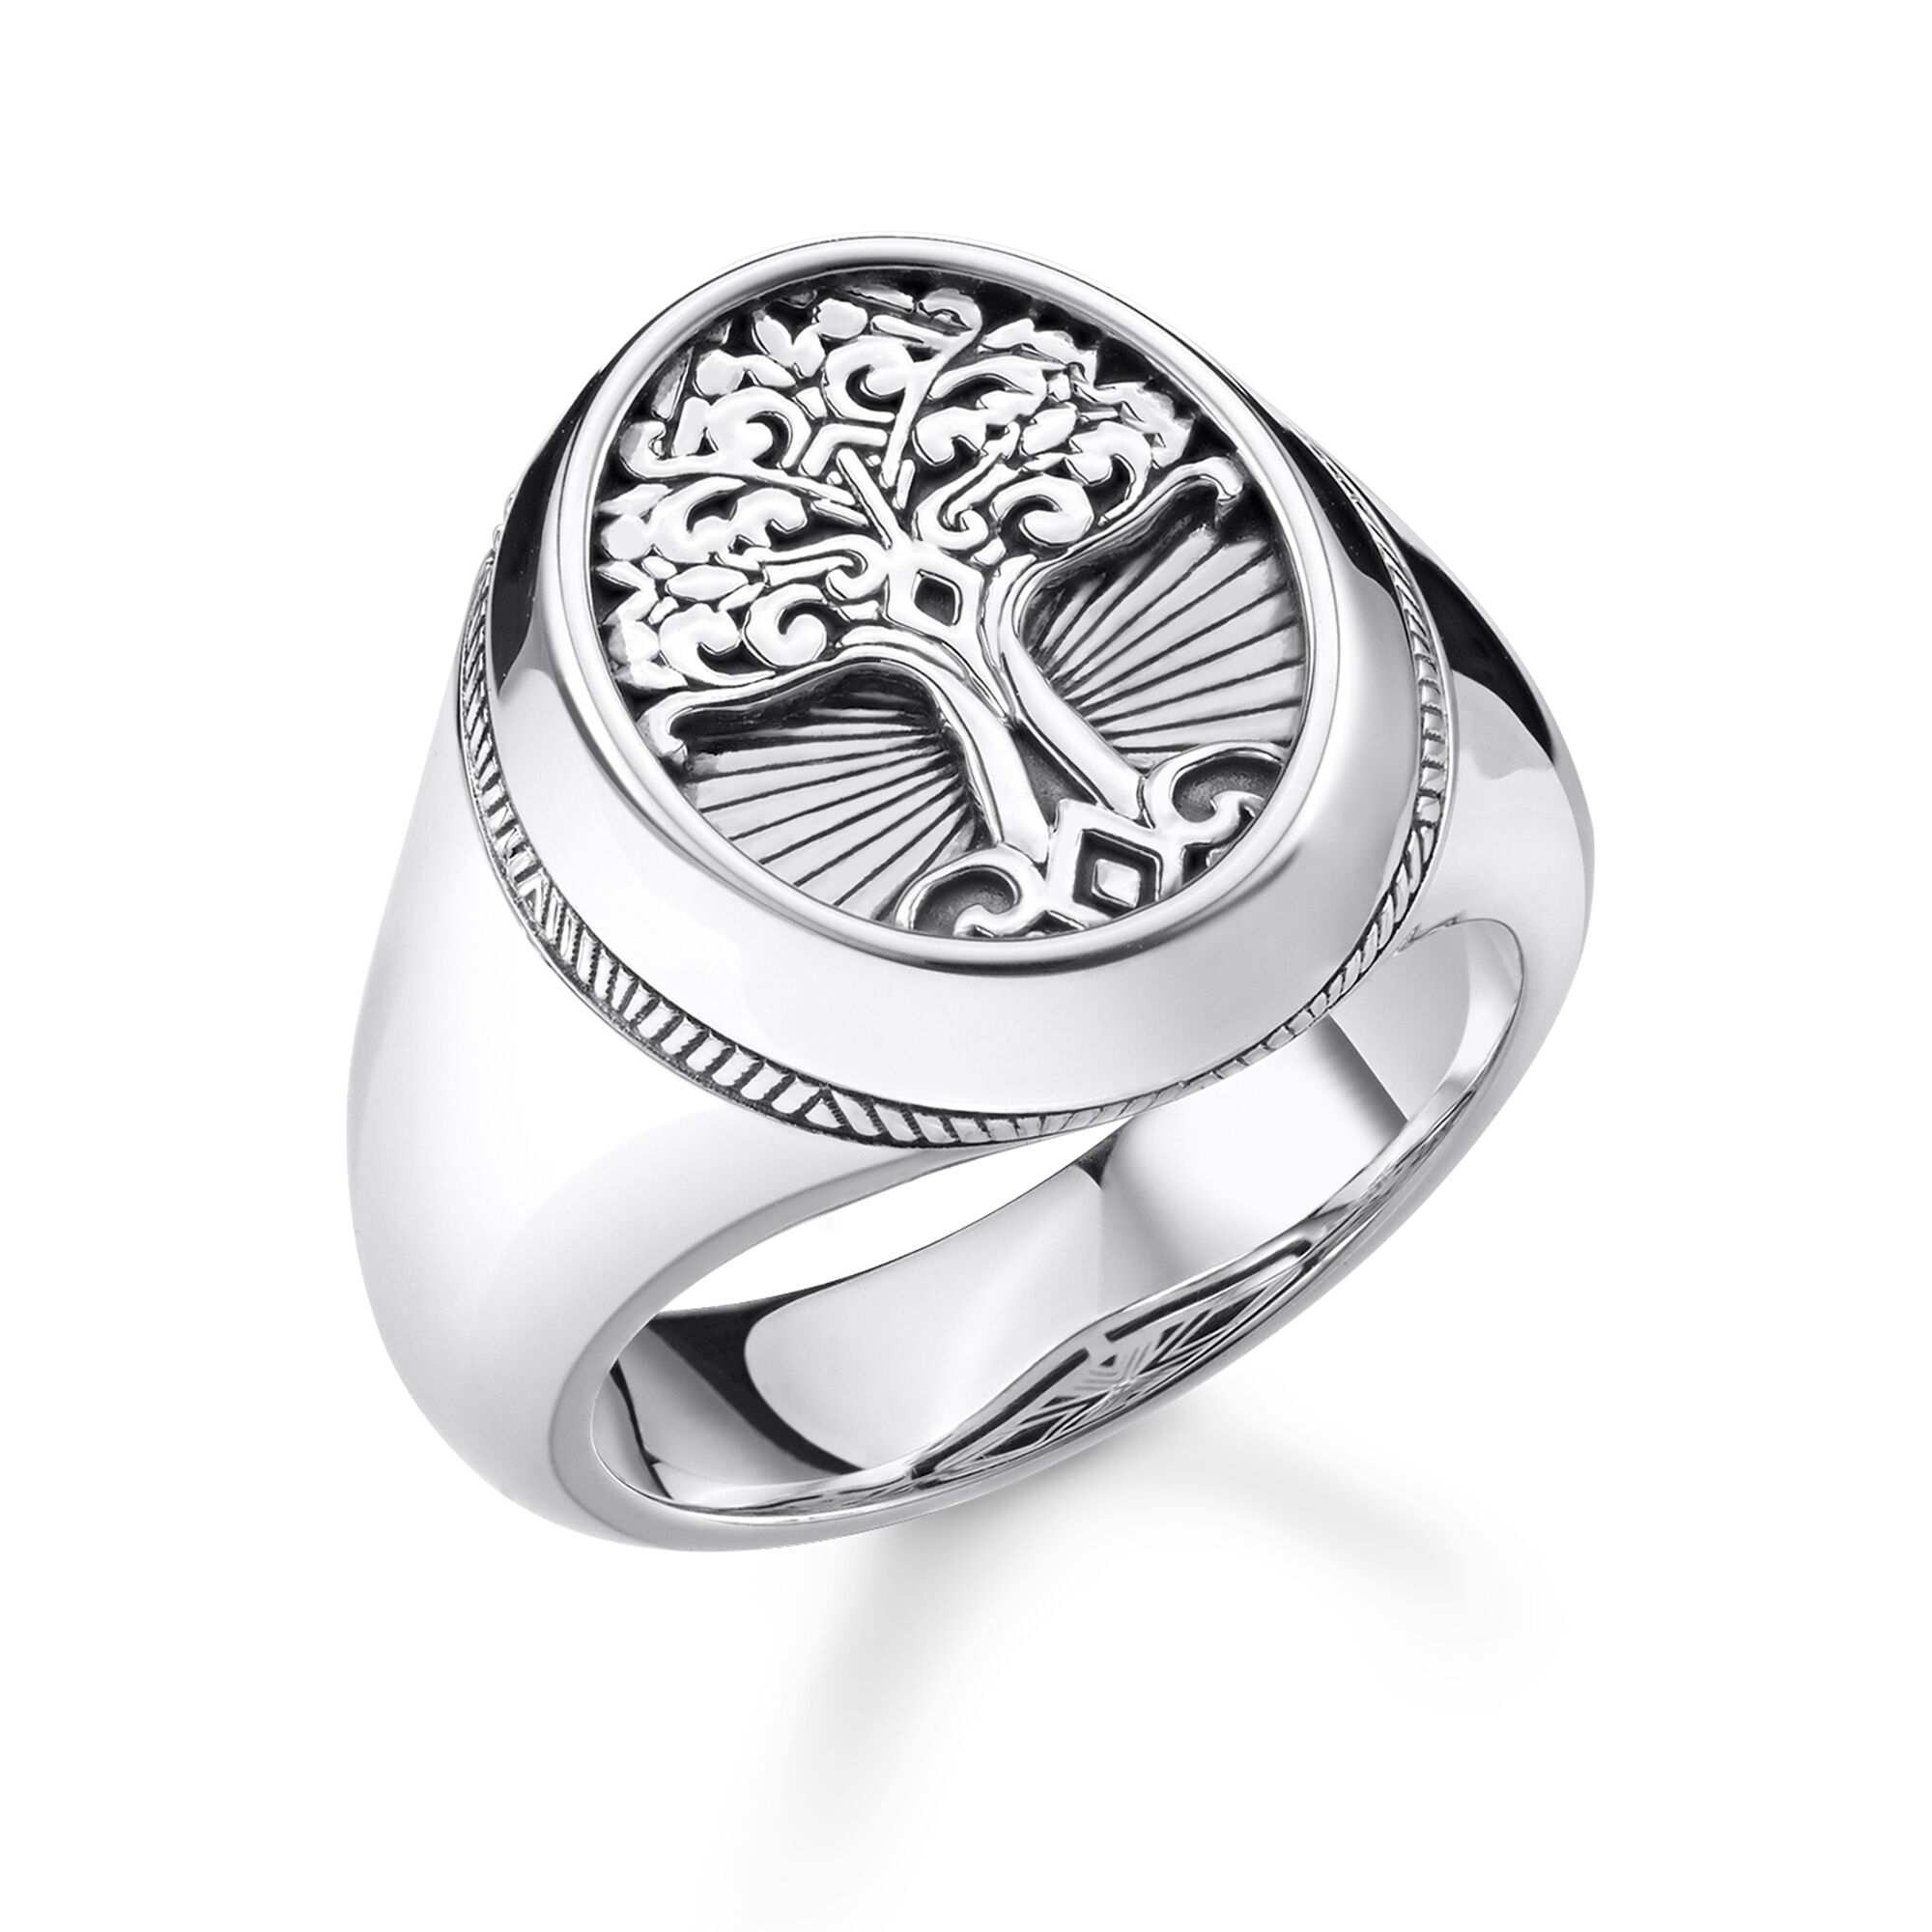 Wholesale Custom design OEM/ODM Jewelry signet ring 925 silver jewelry manufacturer ODM